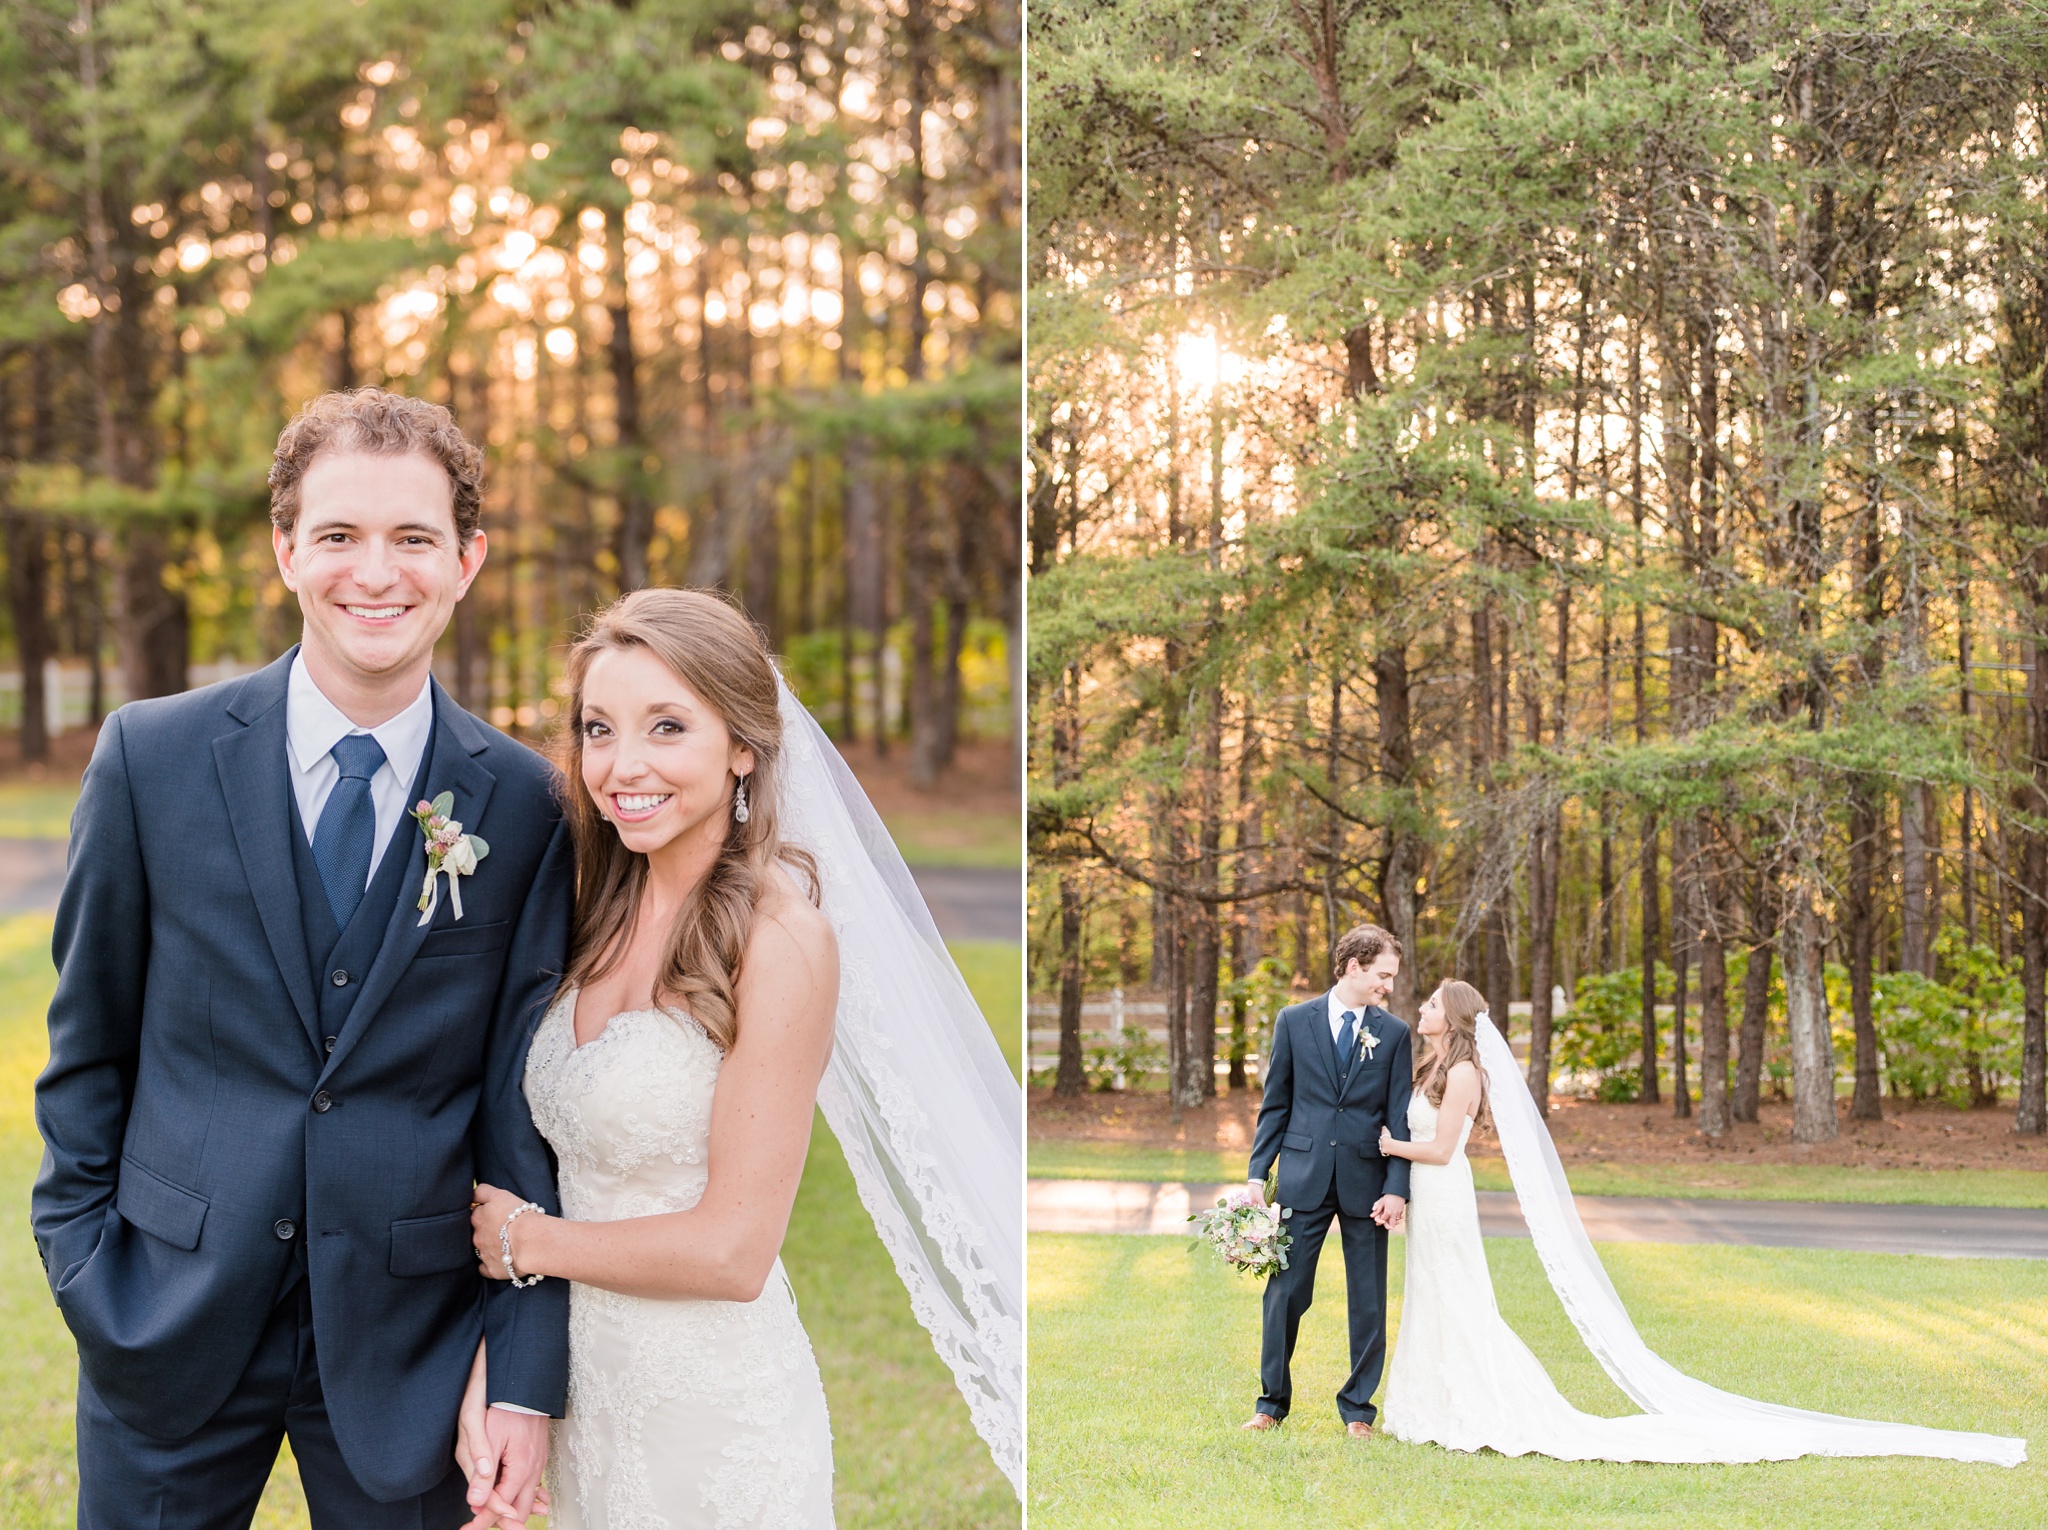 Sonnet House Blush and Gold Spring Wedding | Birmingham Alabama Wedding Photographers_0074.jpg